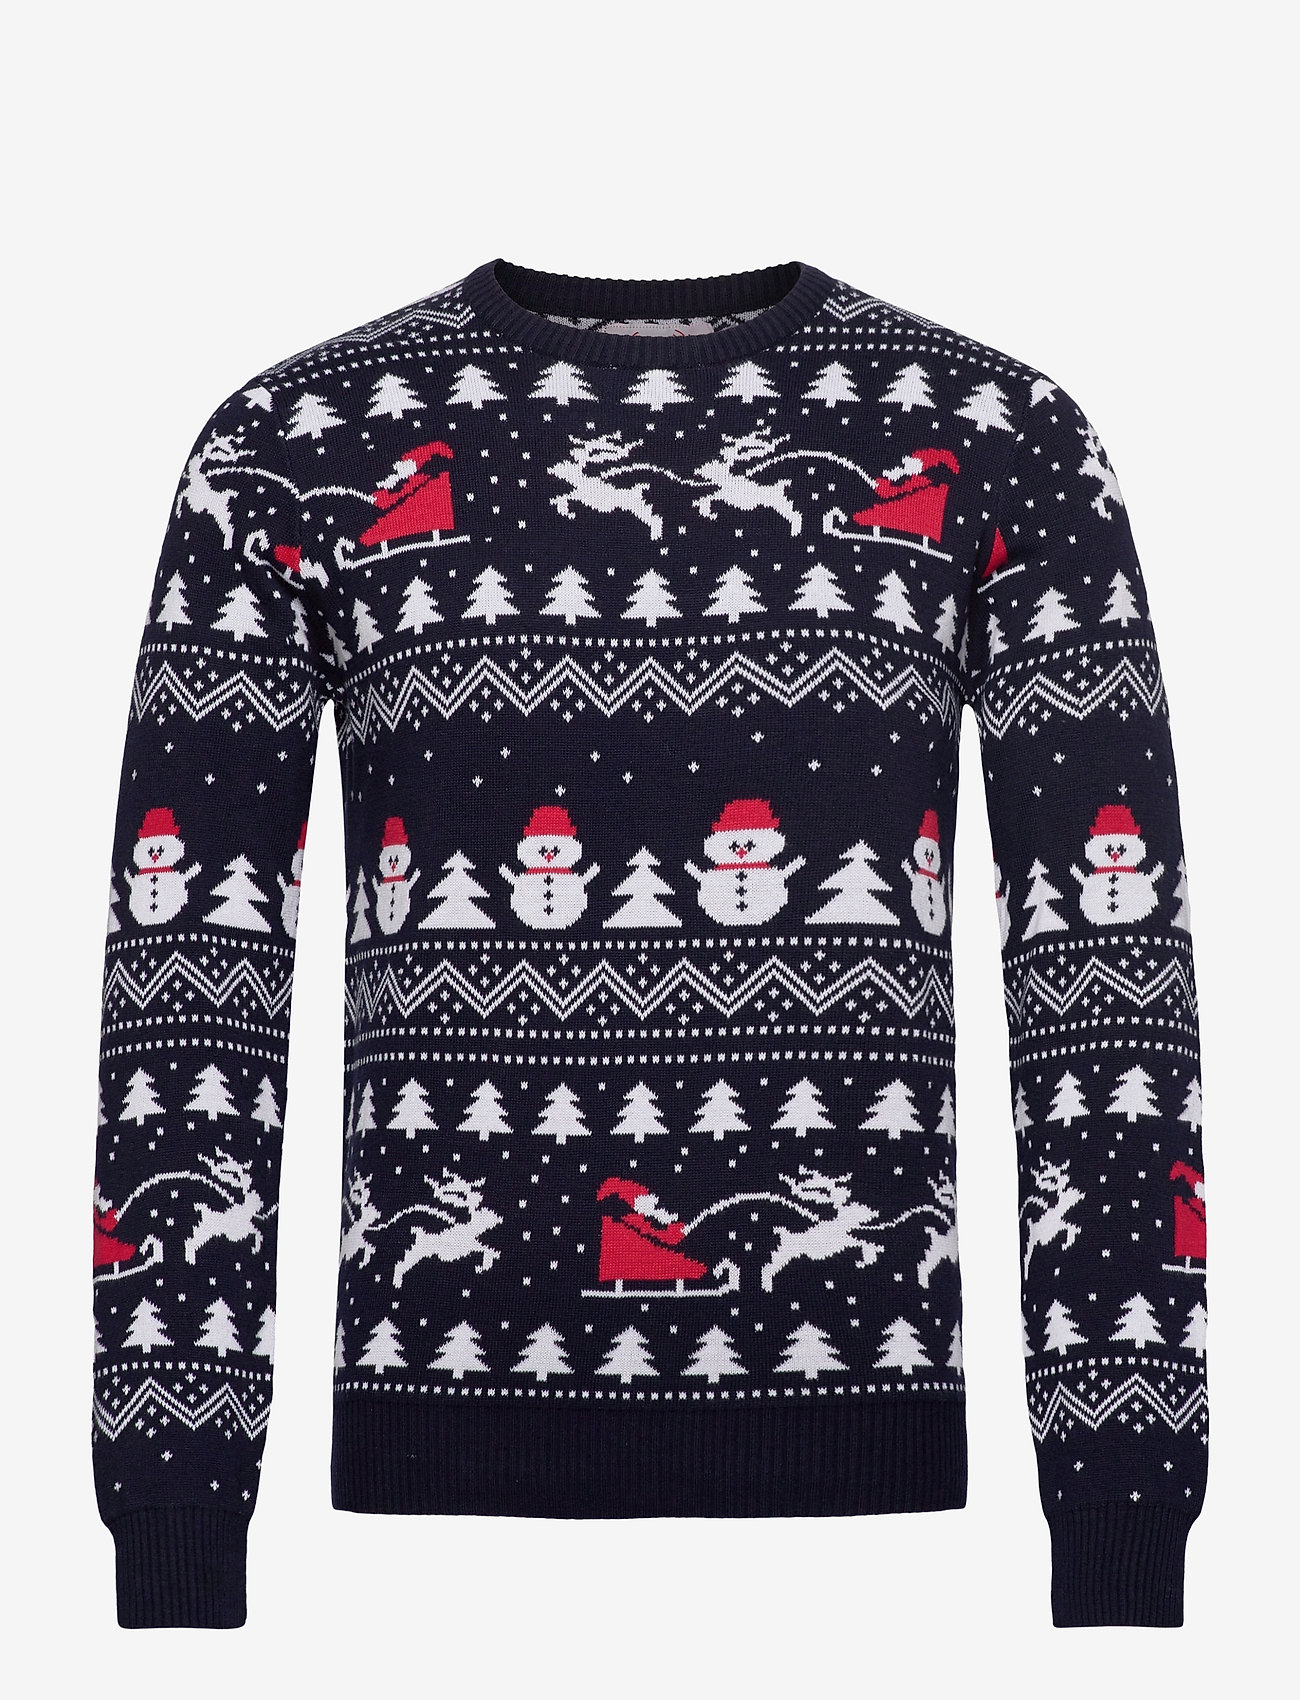 Christmas Sweats - The stylish Christmas Jumper - sweaters - navy/blue - 0